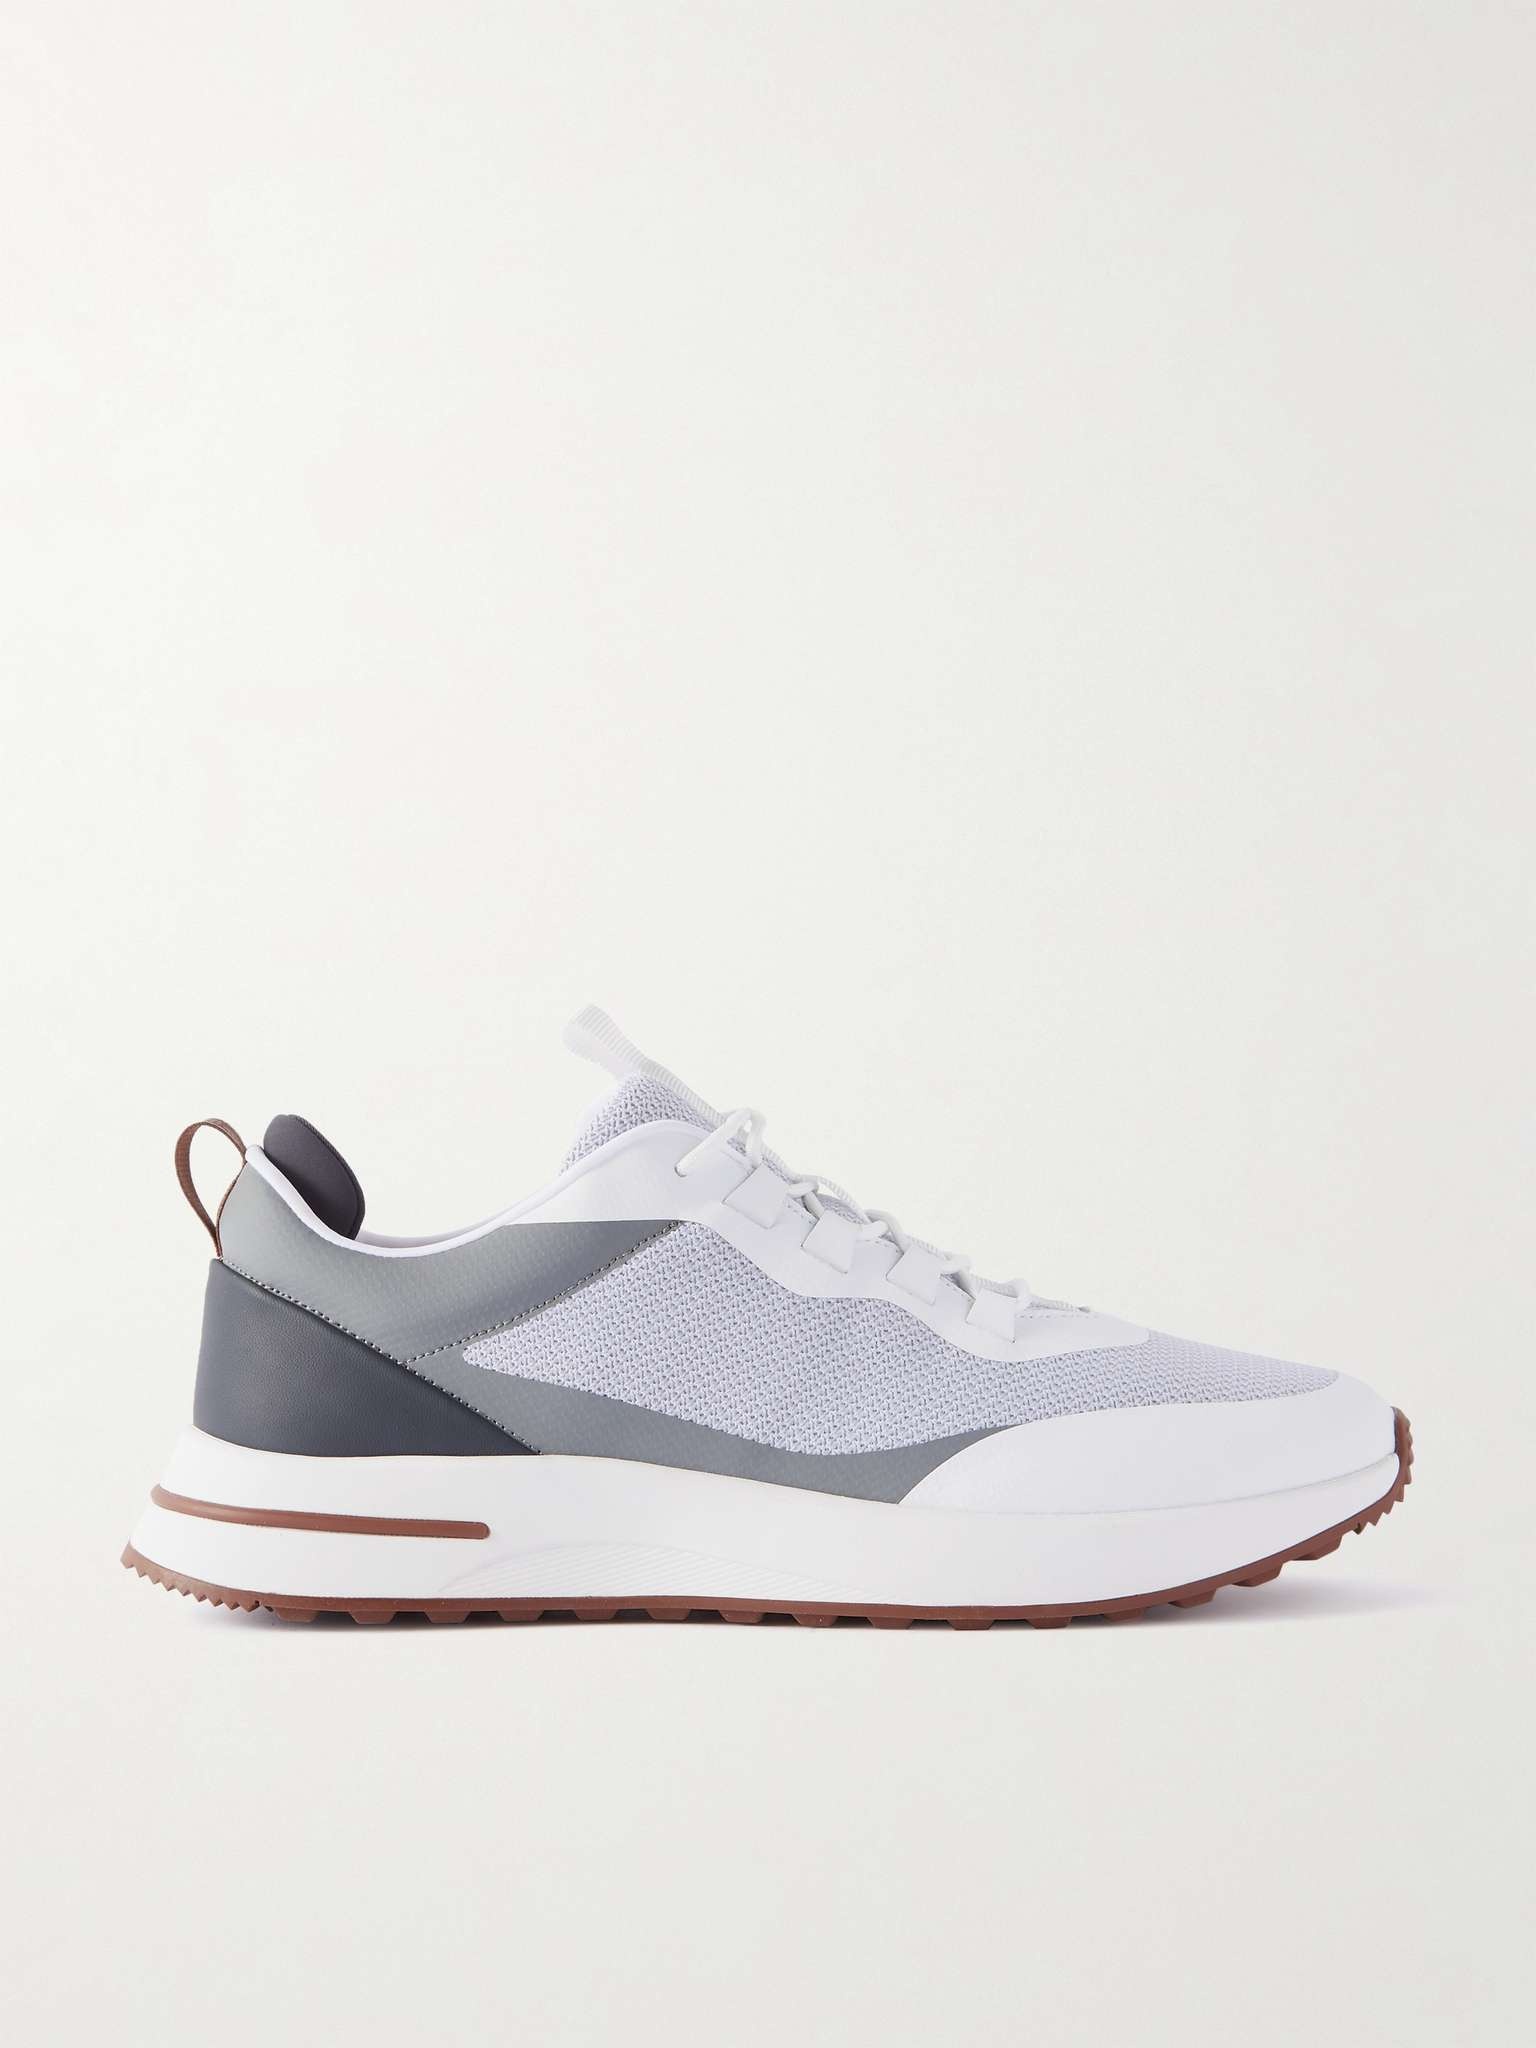 Loro Piana 360 Flexy Walk Wish Stretch-Knit Slip-On Sneakers Shoes